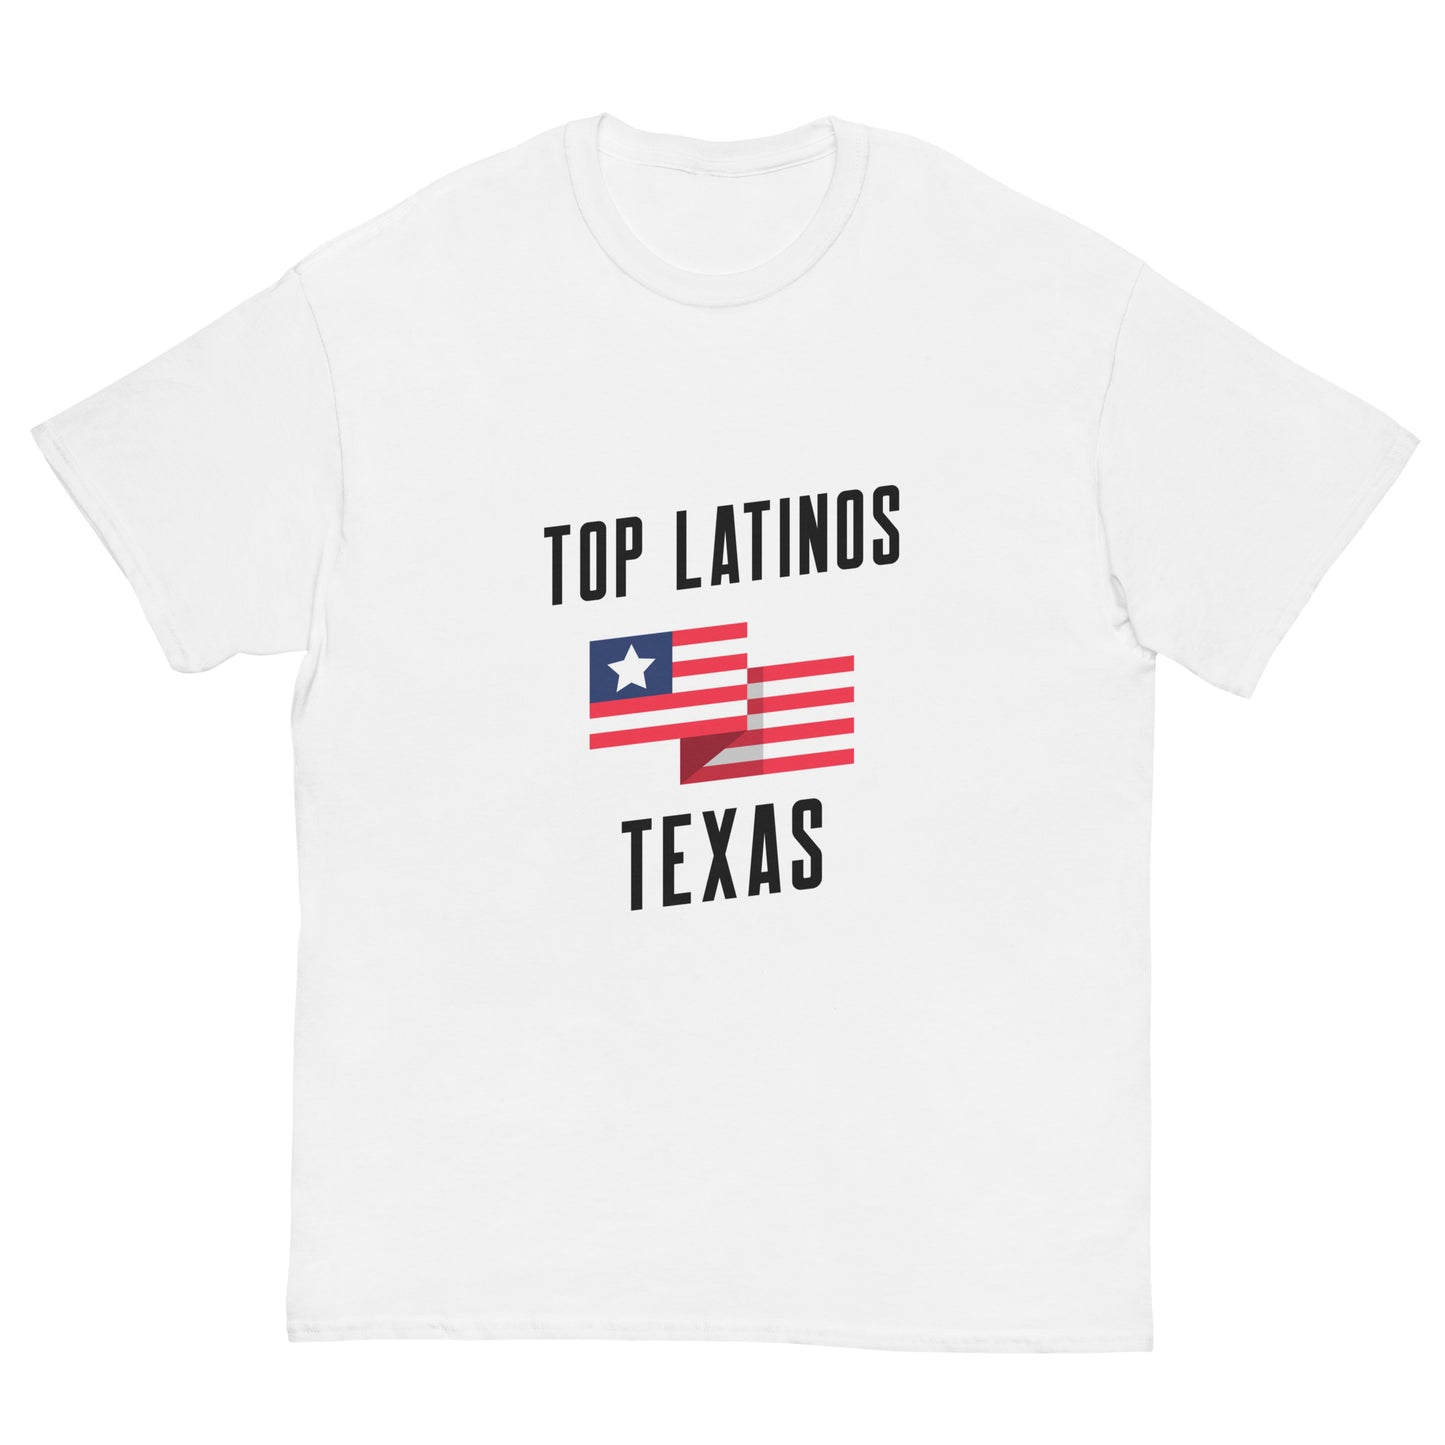 Top Latinos Texas classic tee